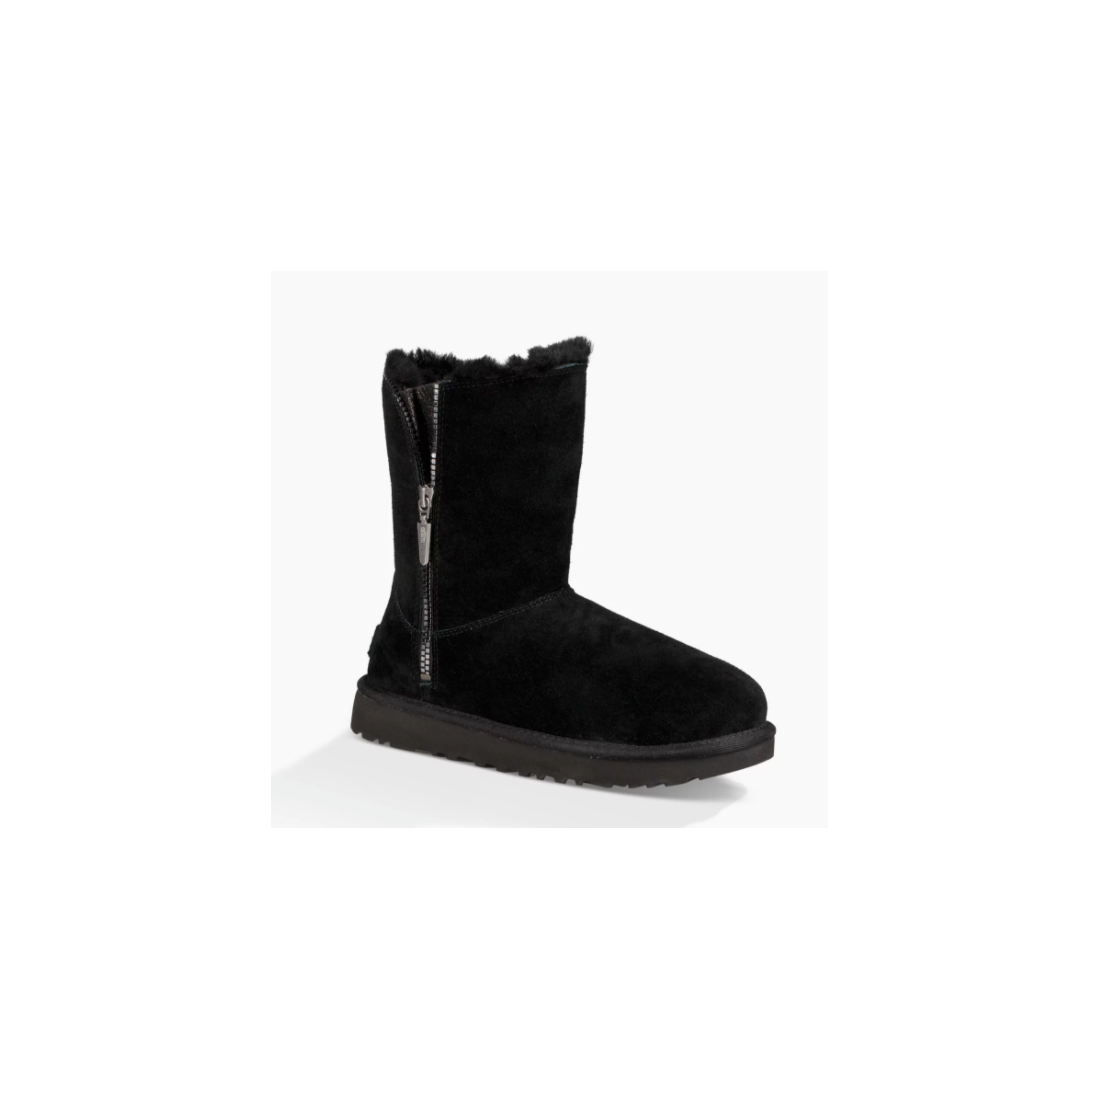 Marice boot black